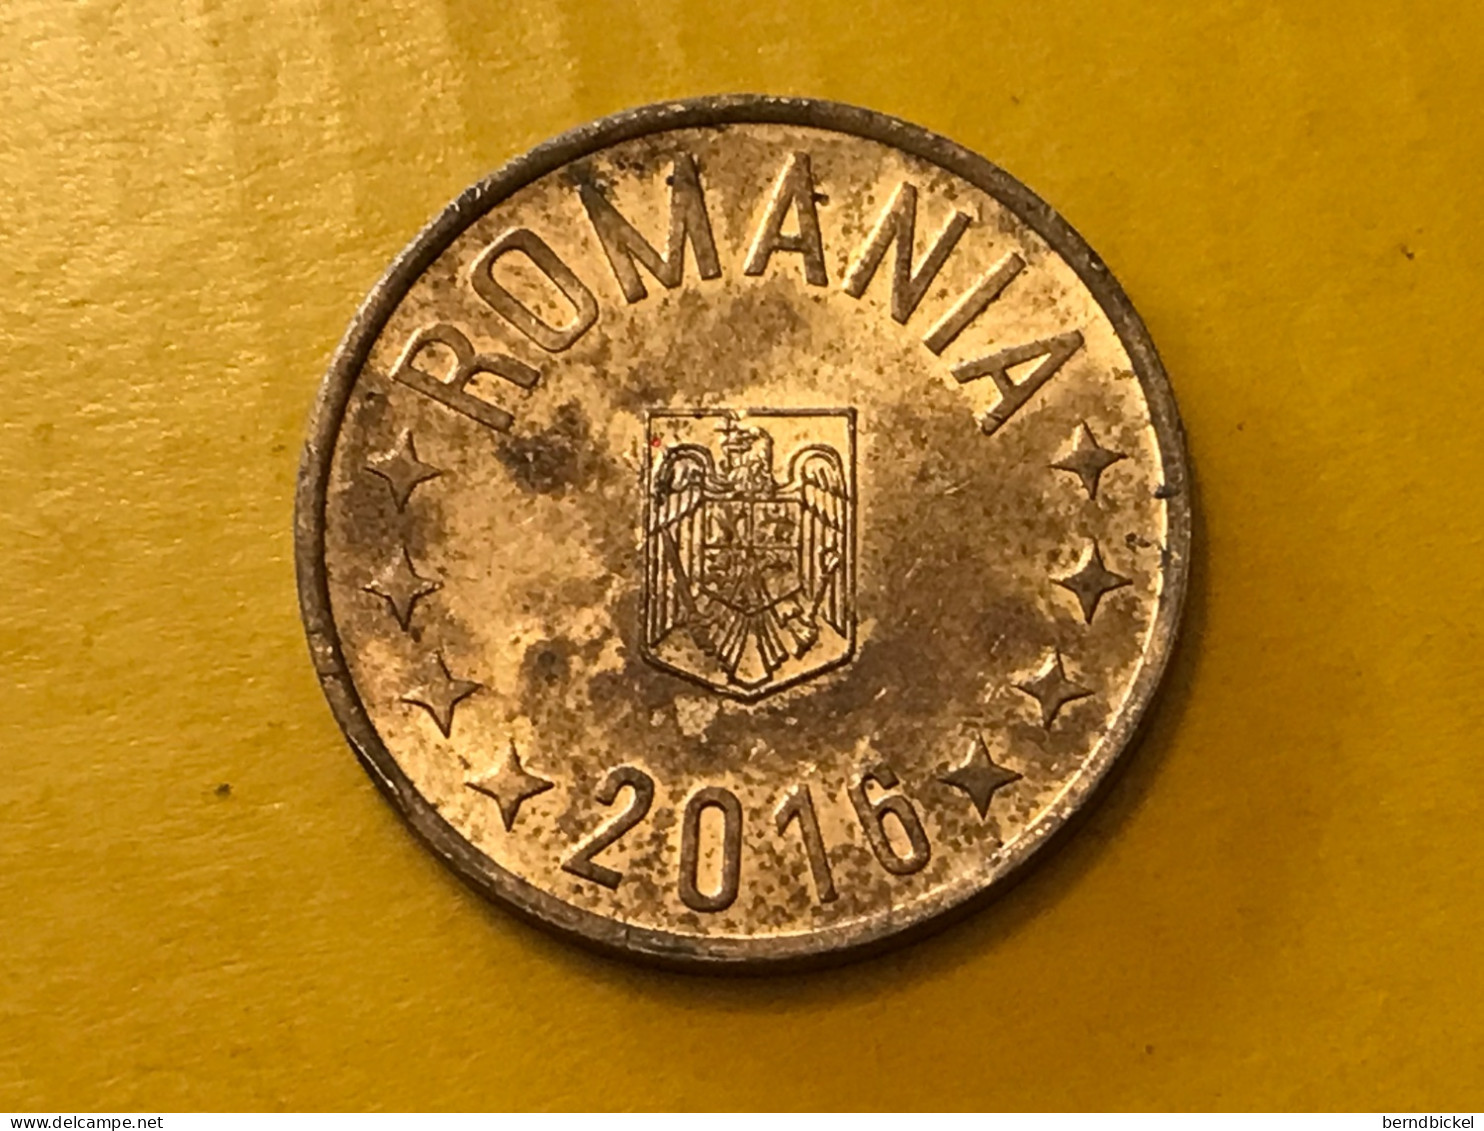 Münze Münzen Umlaufmünze Rumänien 50 Bani 2016 - Romania